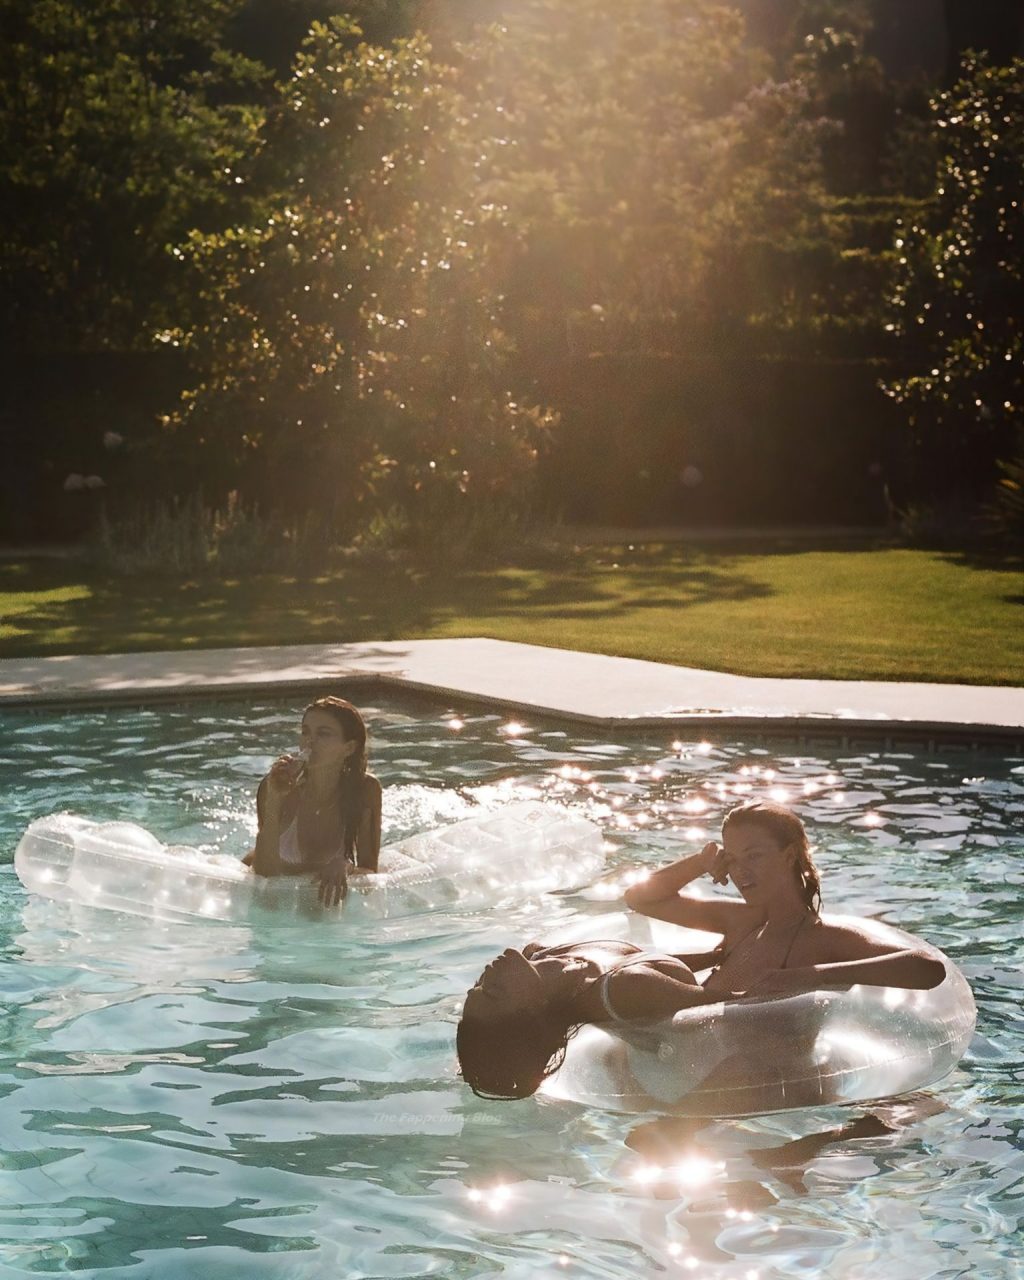 Hailey Clauson Shows Off Her Sexy Bikini Body in the Pool (13 Photos)